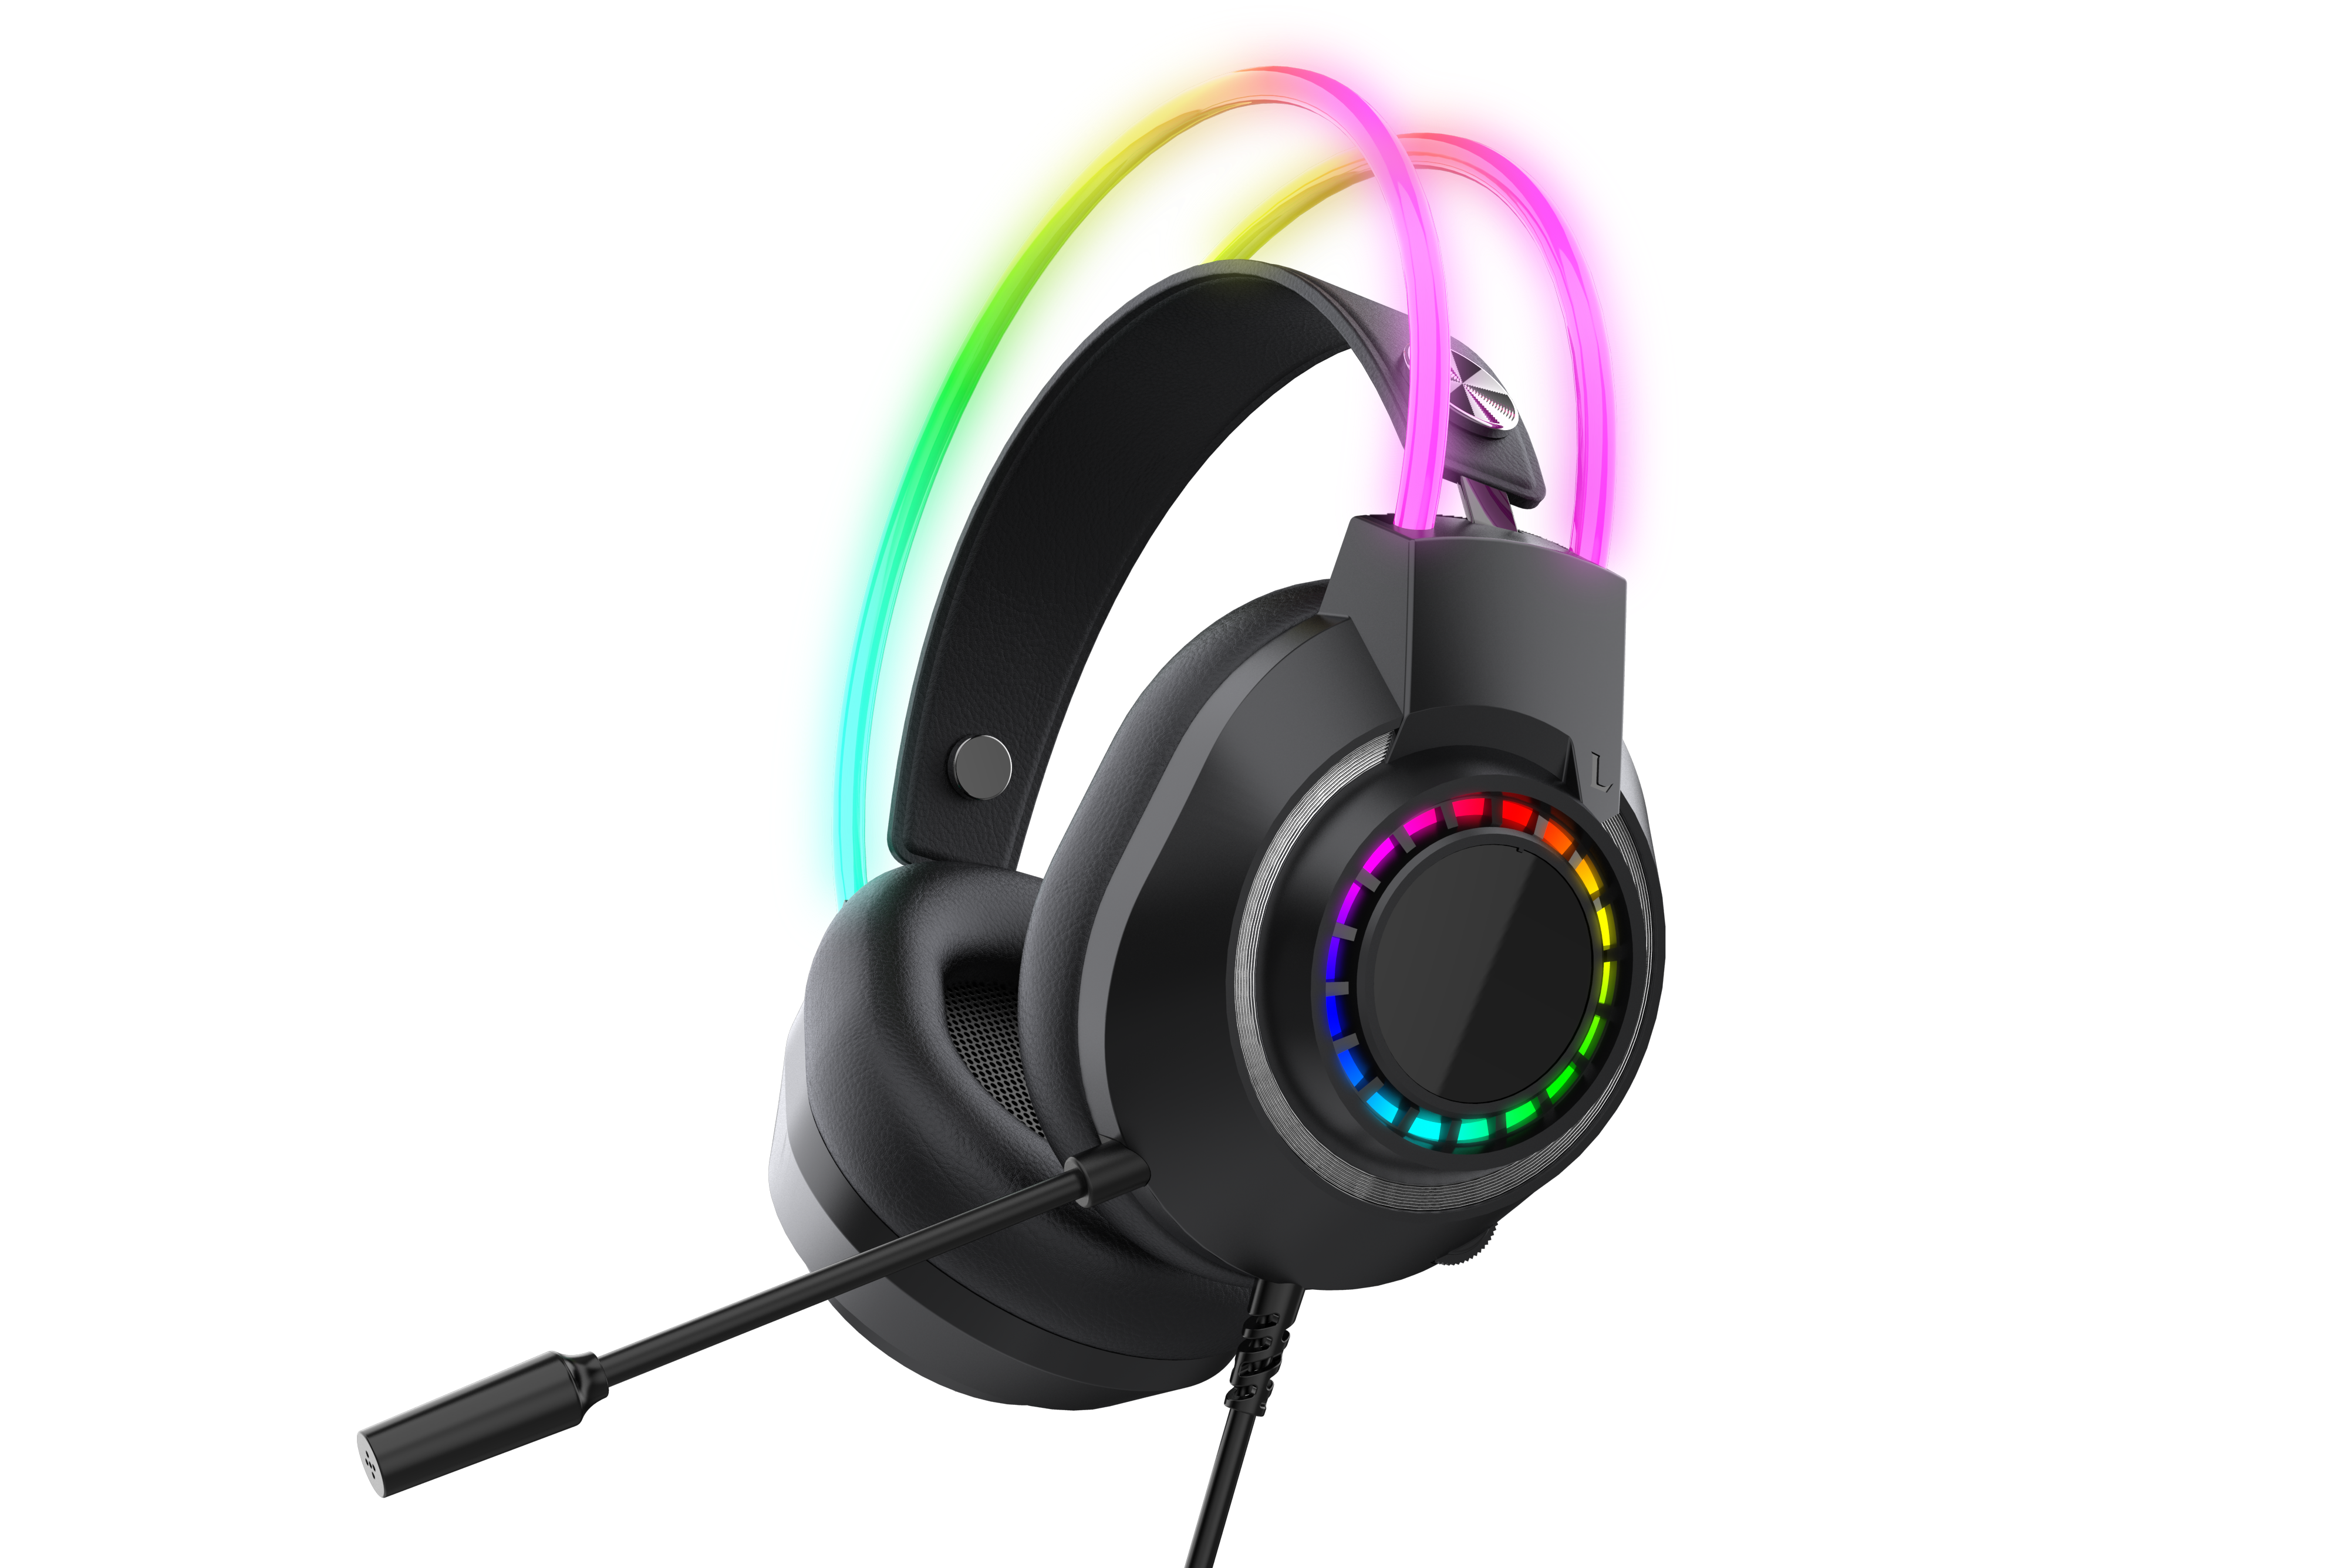 Gaming Headset with lights on headband